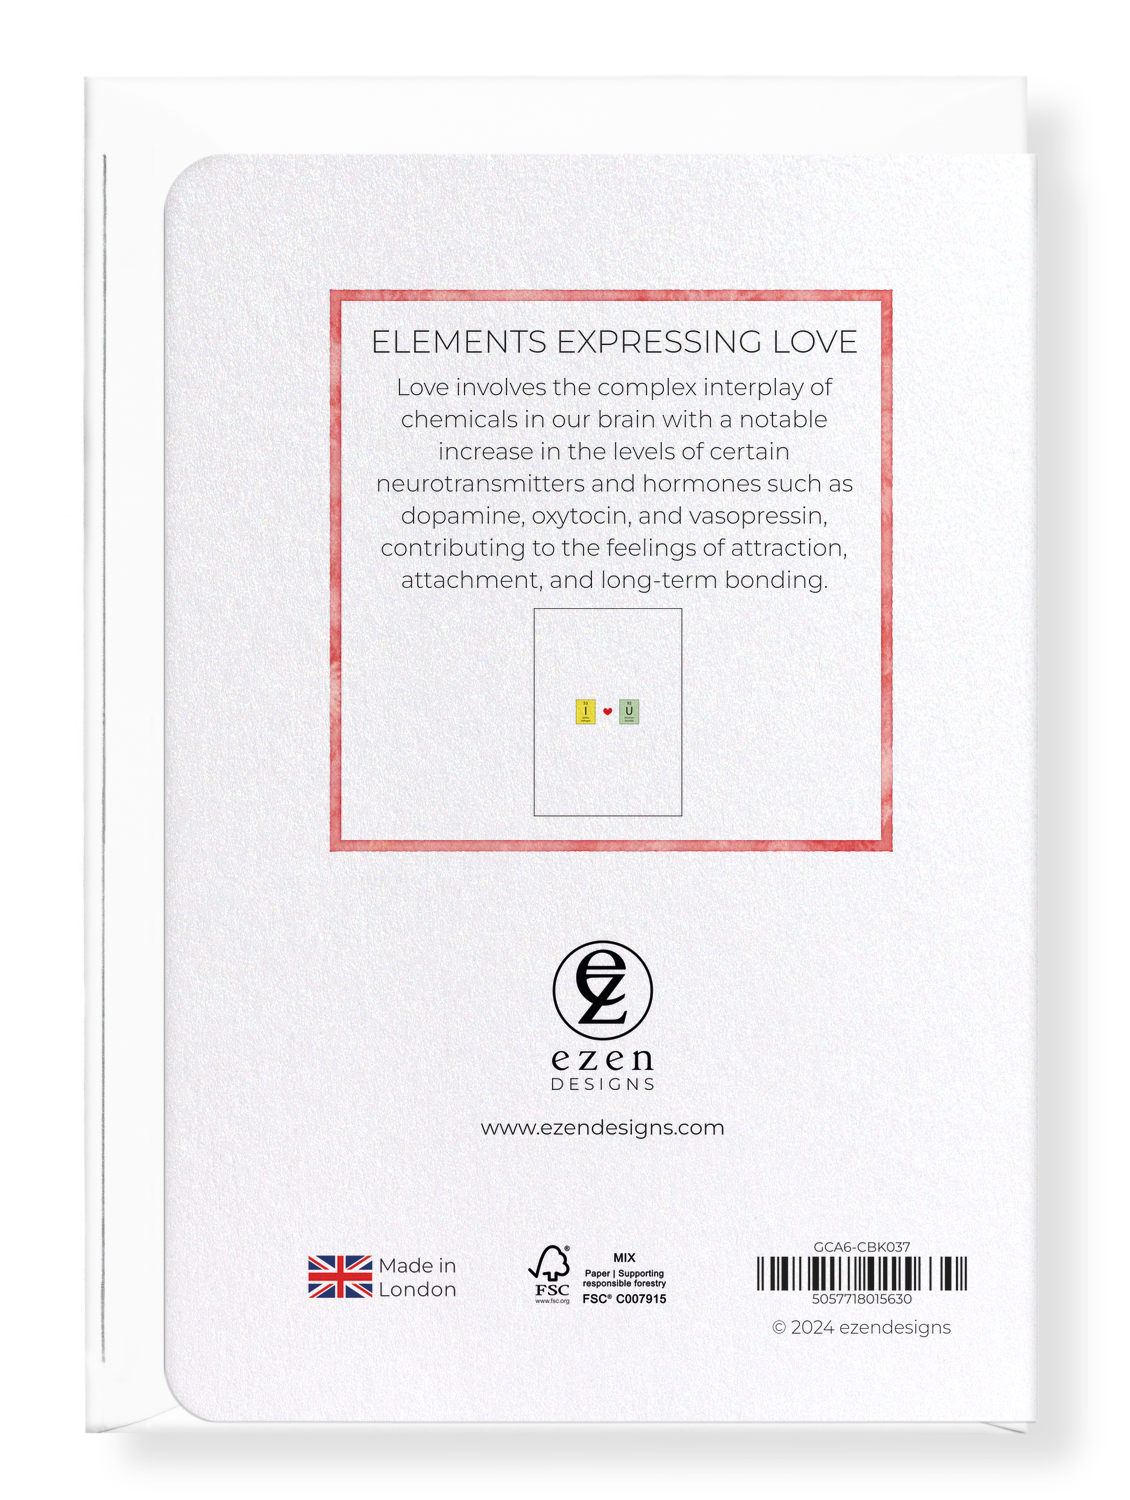 Ezen Designs - ELEMENTS EXPRESSING LOVE - Greeting Card - Back